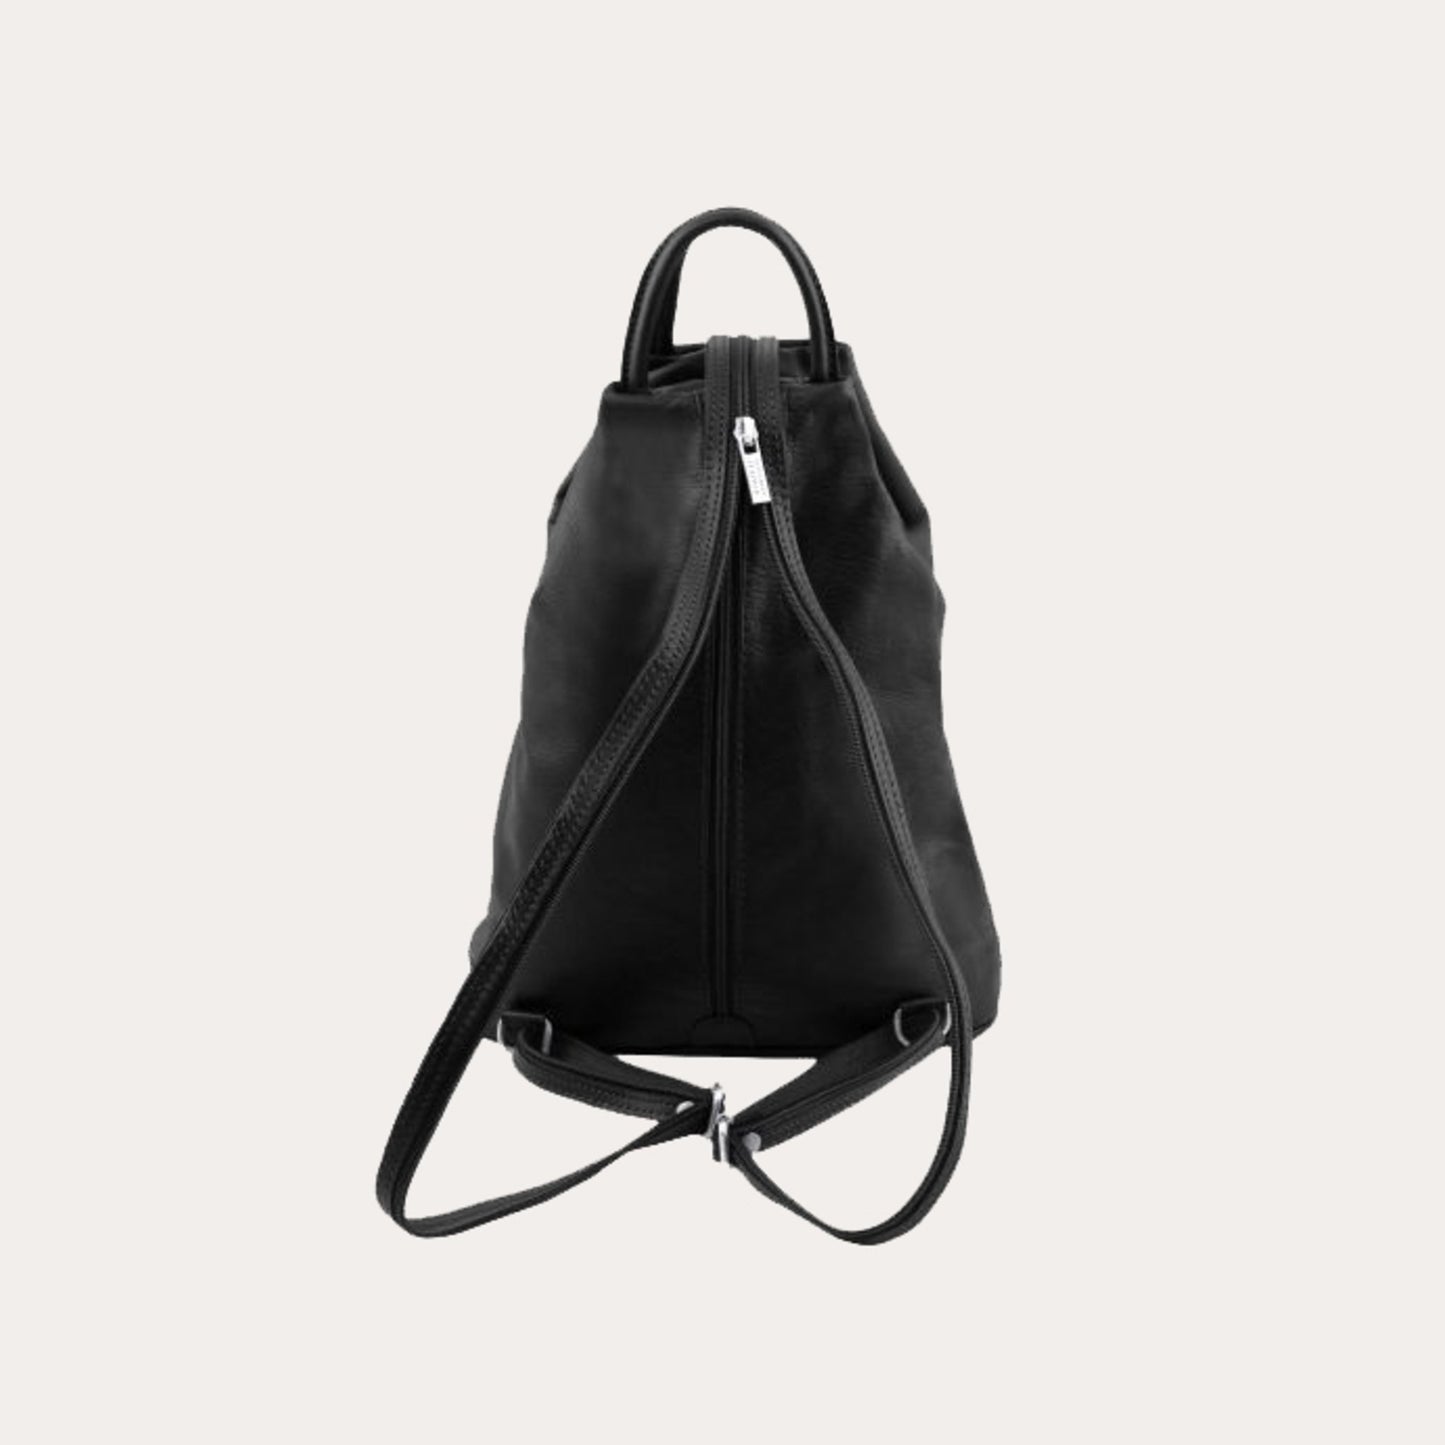 Tuscany Leather Black Leather Backpack